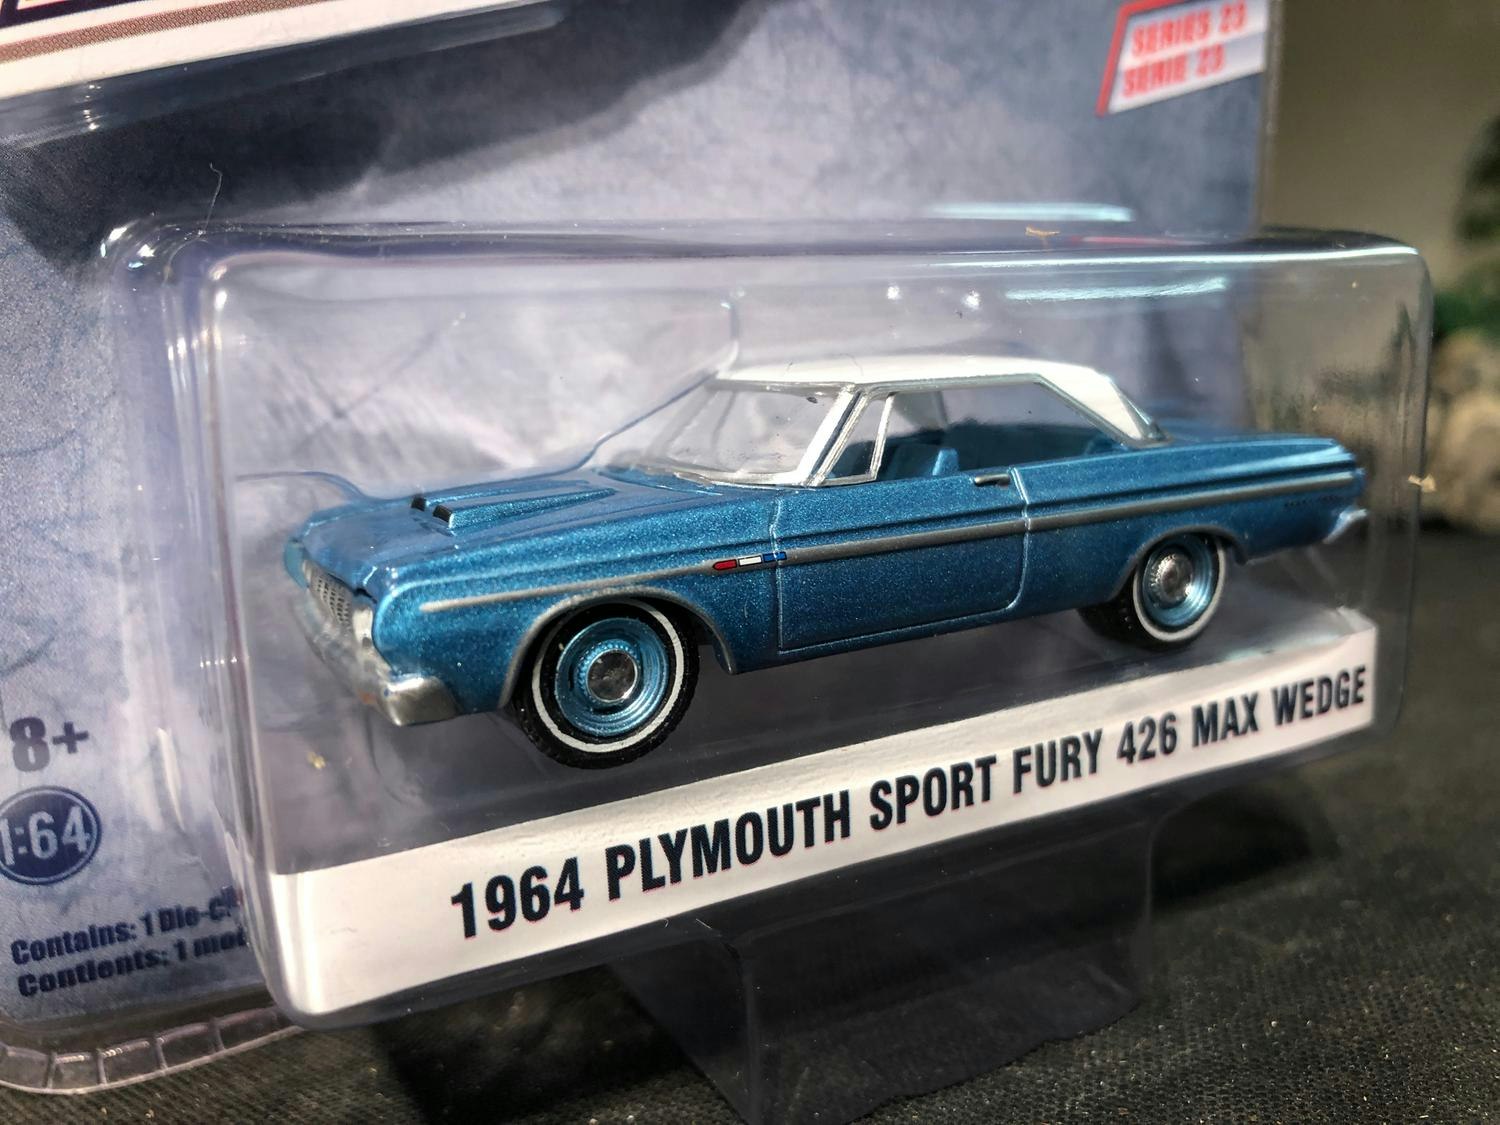 Skala 1/64 Plymouth Sport Fury 426 max Wedge 64' "GL Muscle" från Greenlight